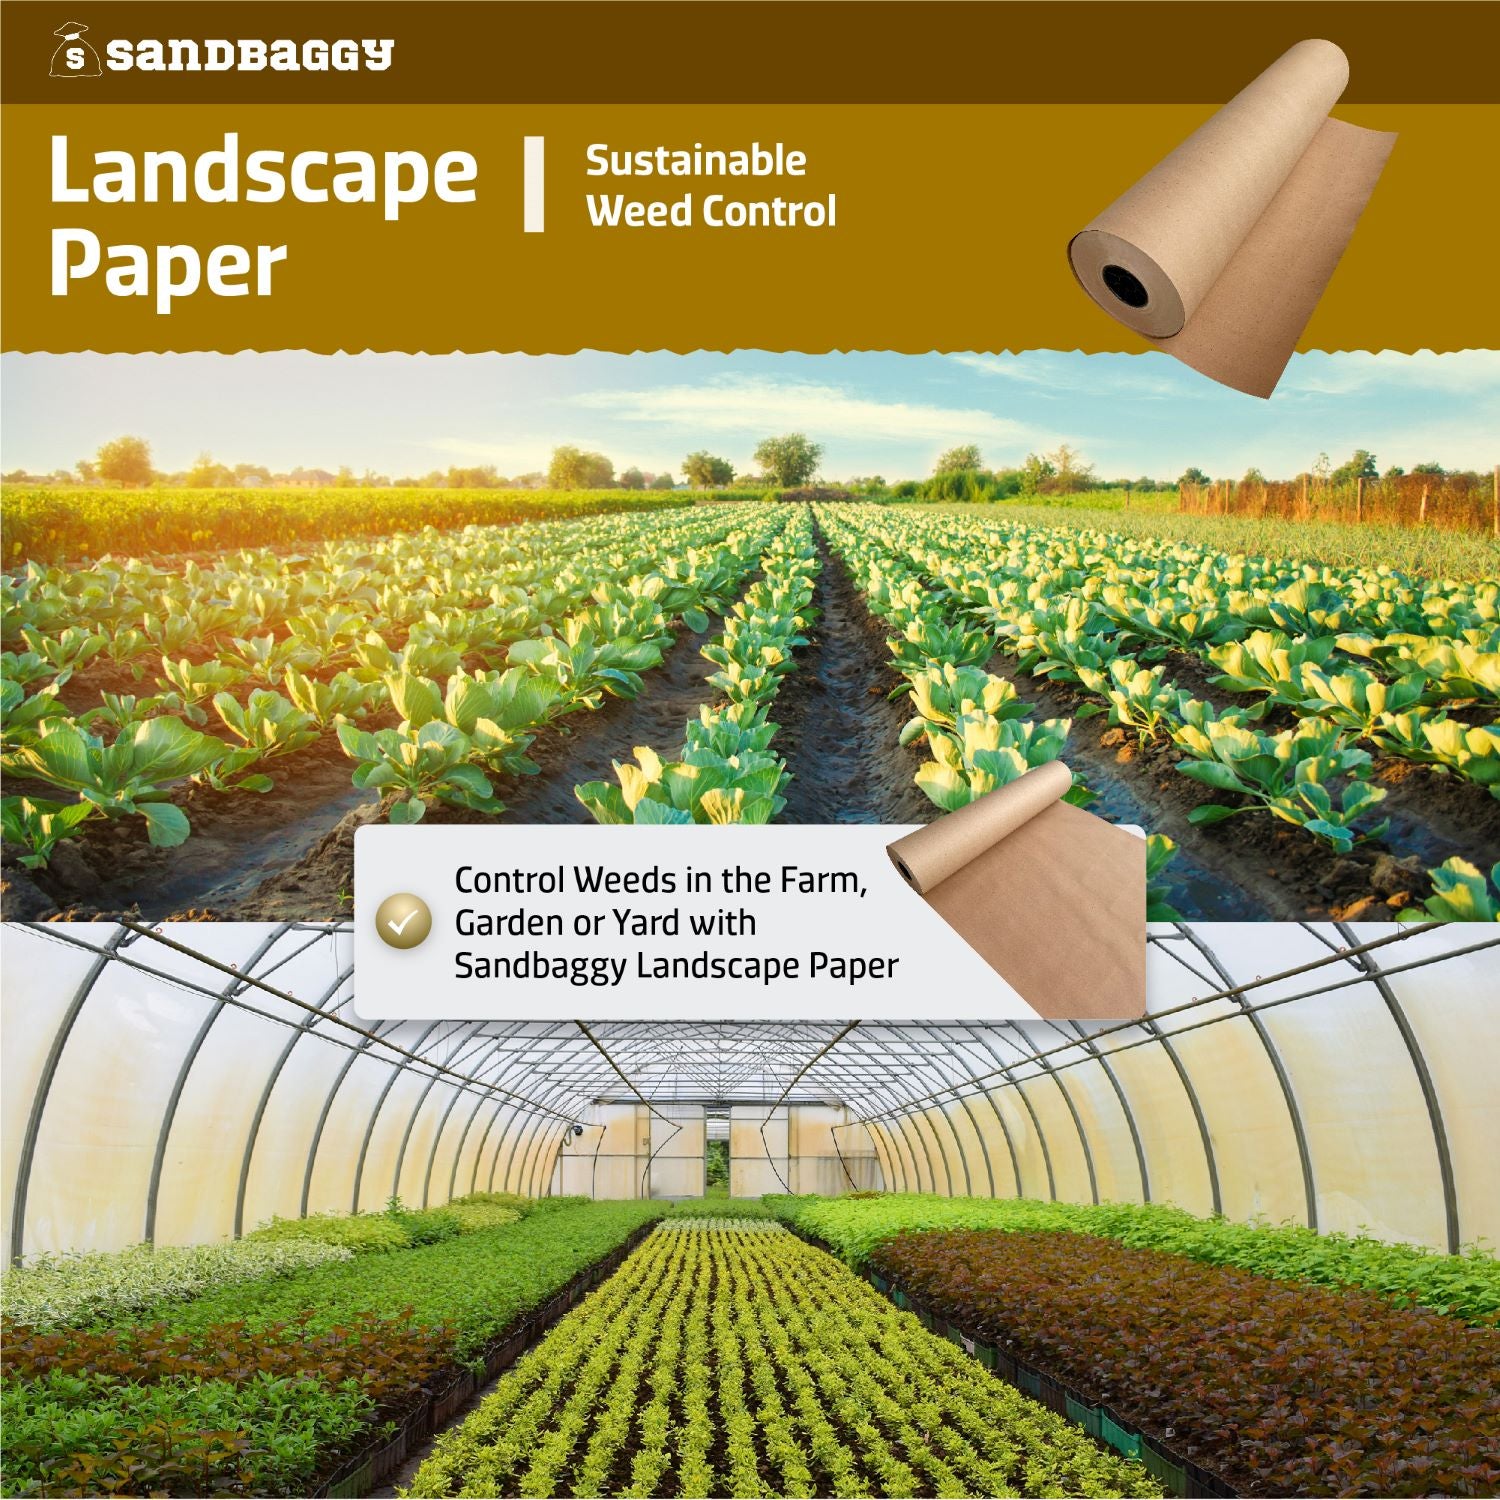 Biodegradable Landscape Fabric - Garden Paper Rolls For Weeds